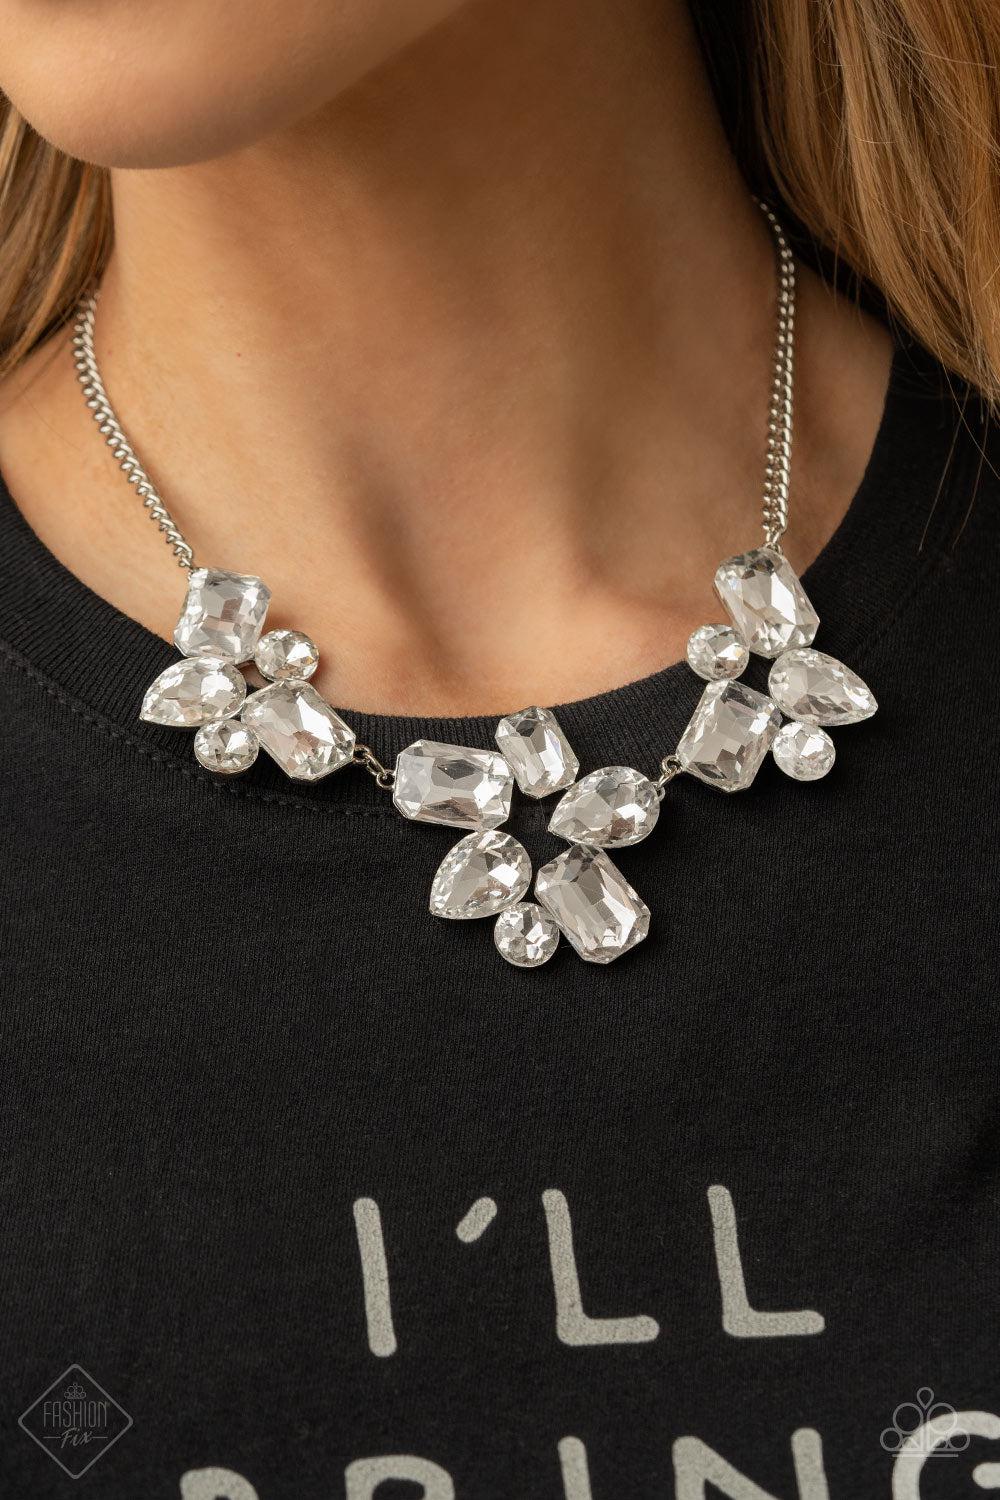 Galactic Goddess White Rhinestone Necklace - Paparazzi Accessories - model -CarasShop.com - $5 Jewelry by Cara Jewels